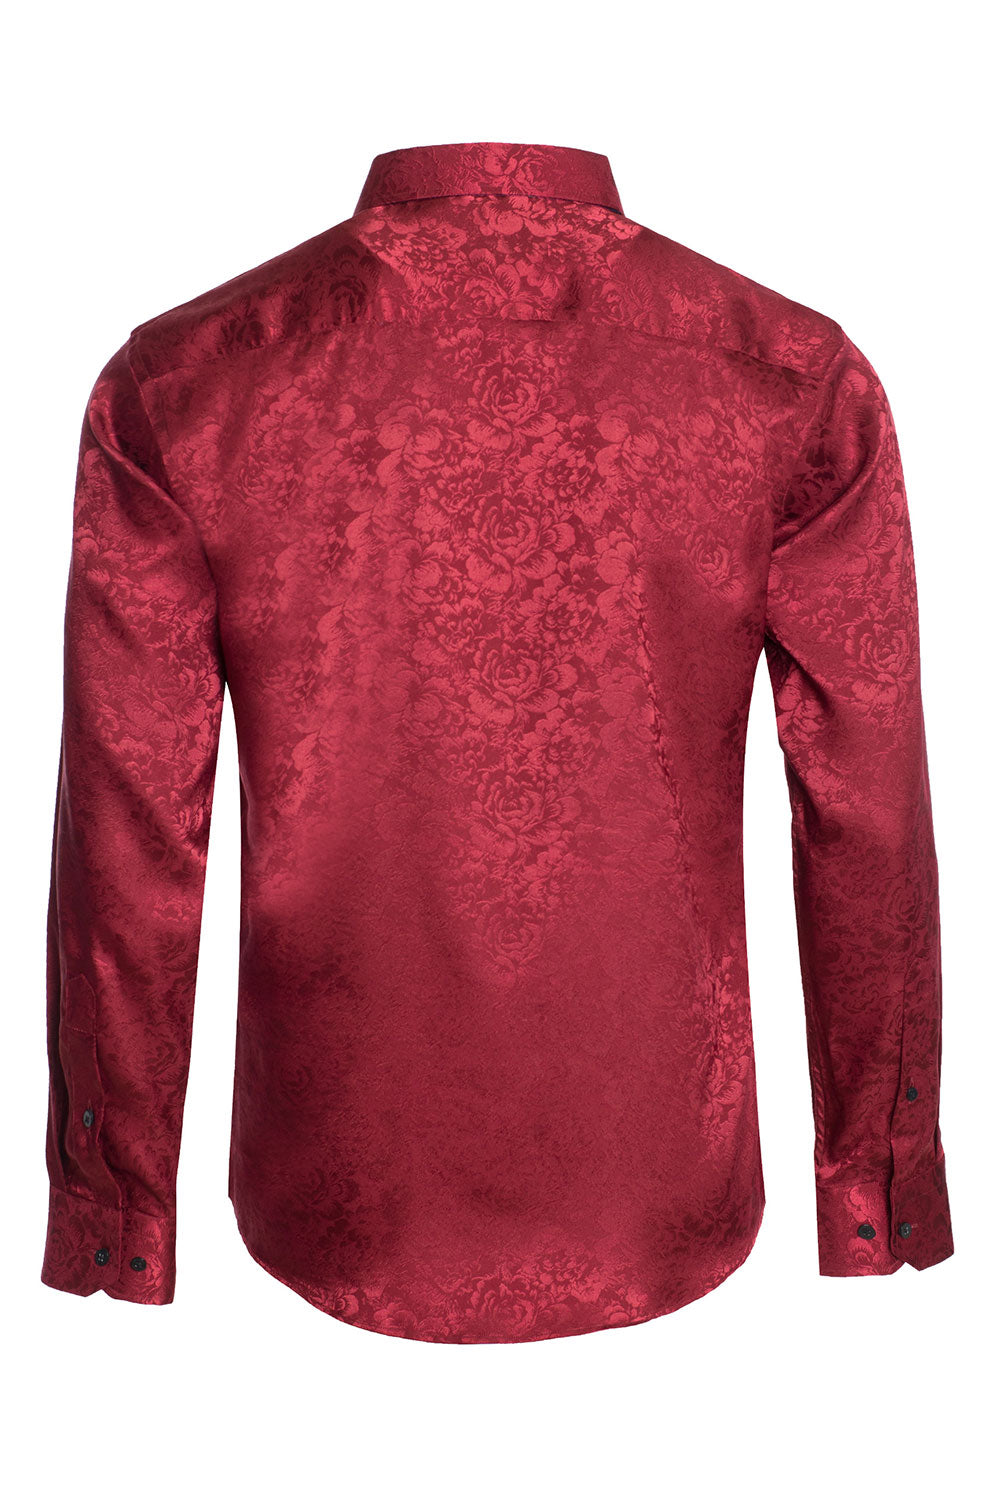 BARABAS Men textured floral button down Burgundy shirts B309